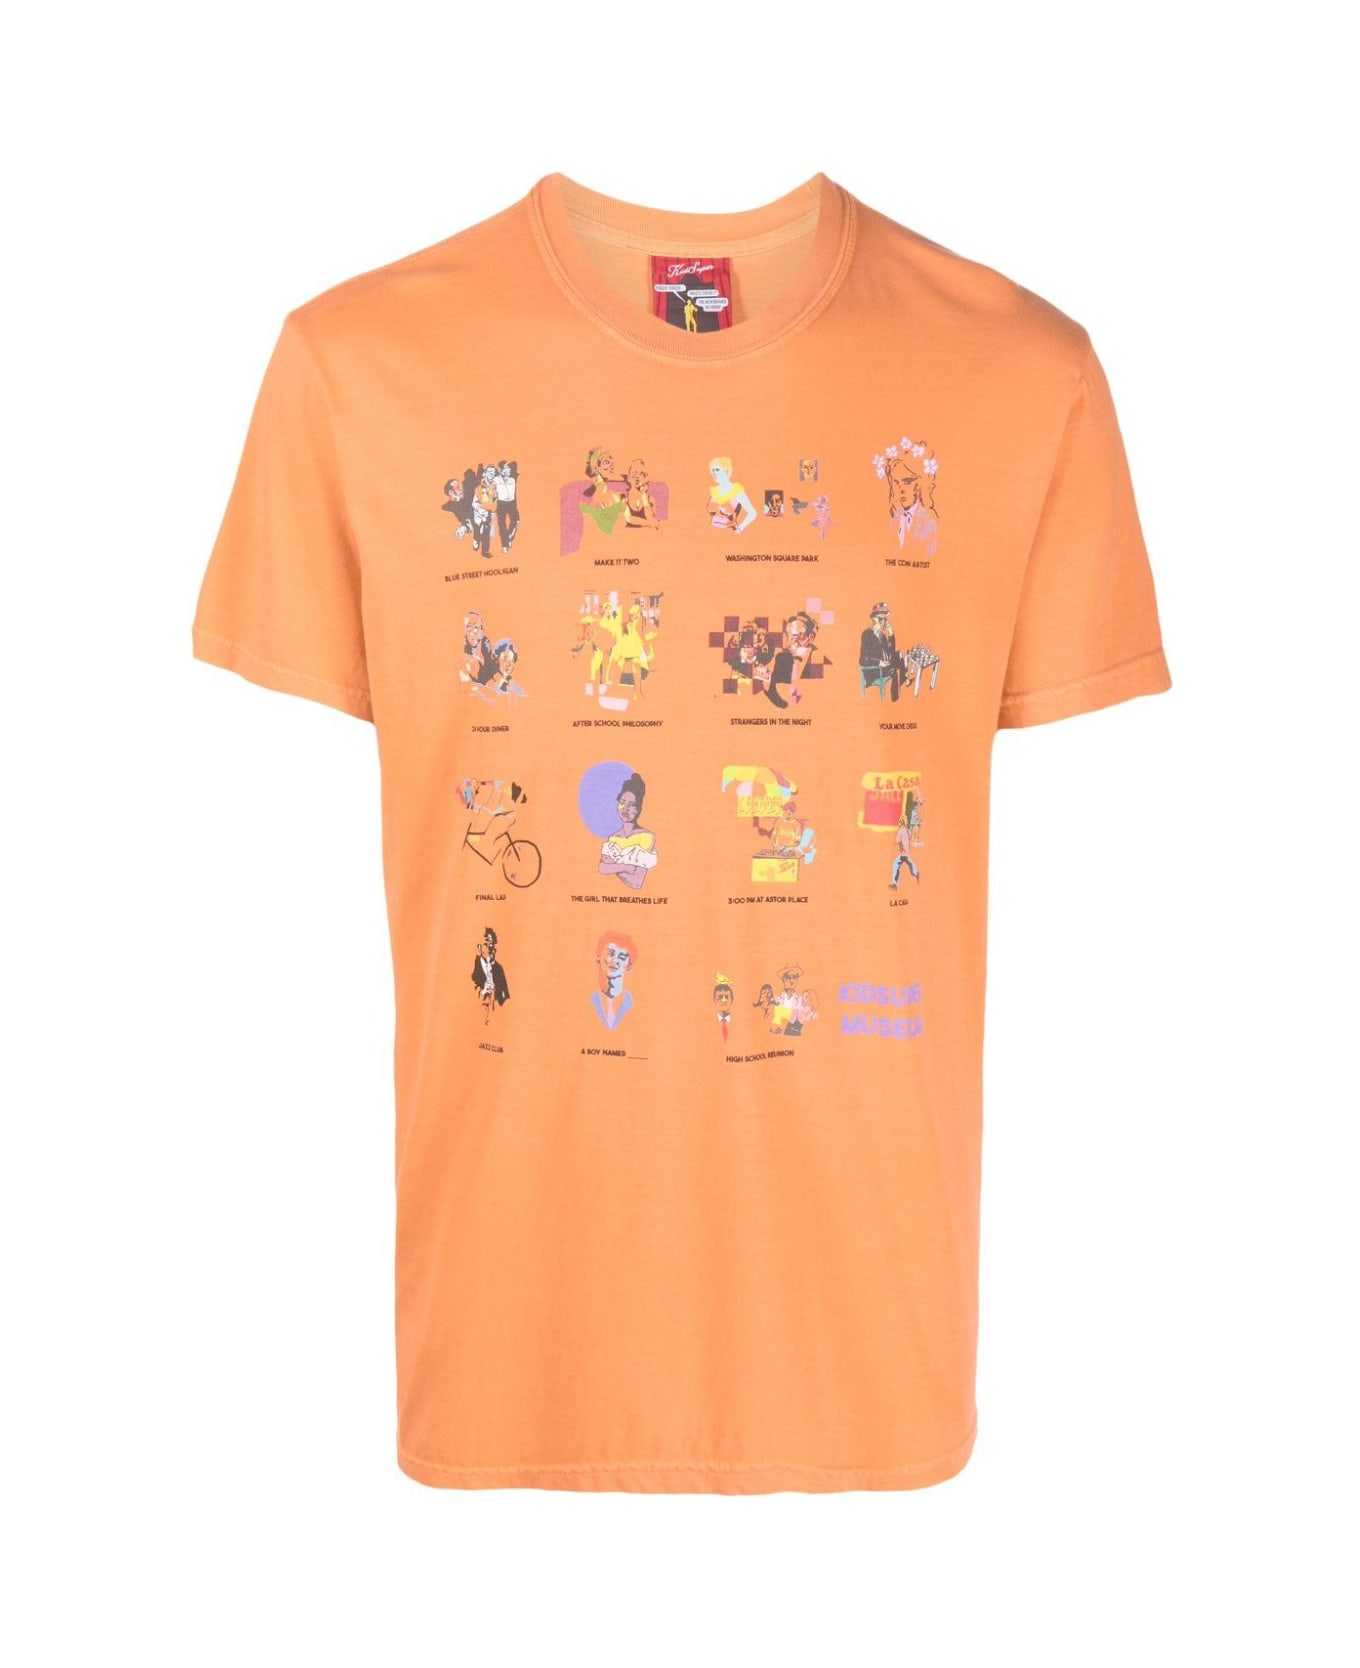 Kidsuper Short Sleeves T-shirt - Multi